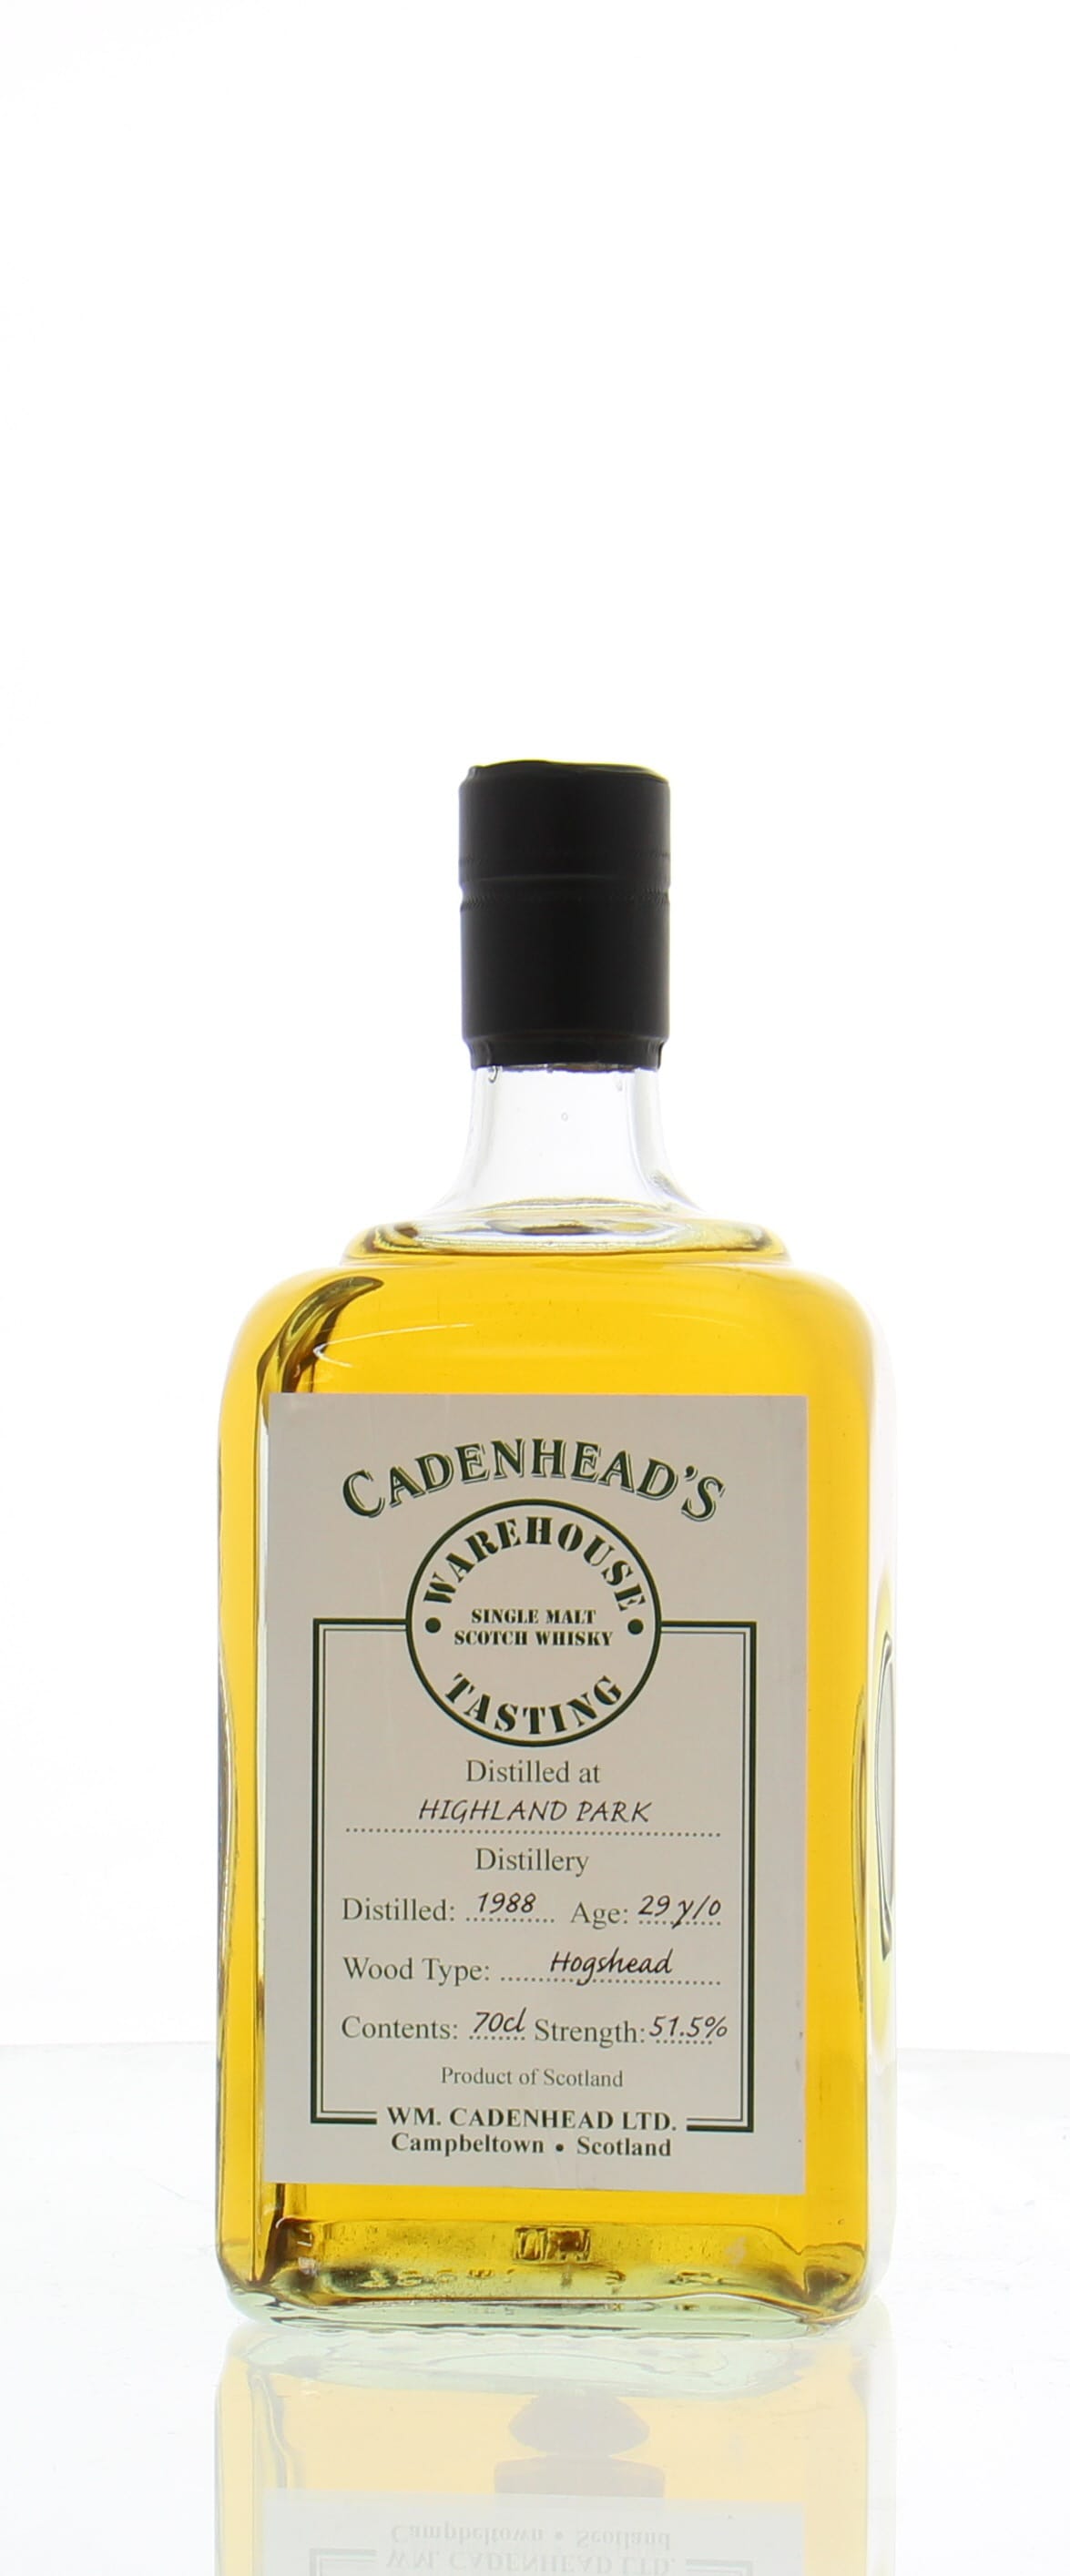 Highland Park - 29 Years Old Cadenhead's Warehouse Tasting 51.5% 1988